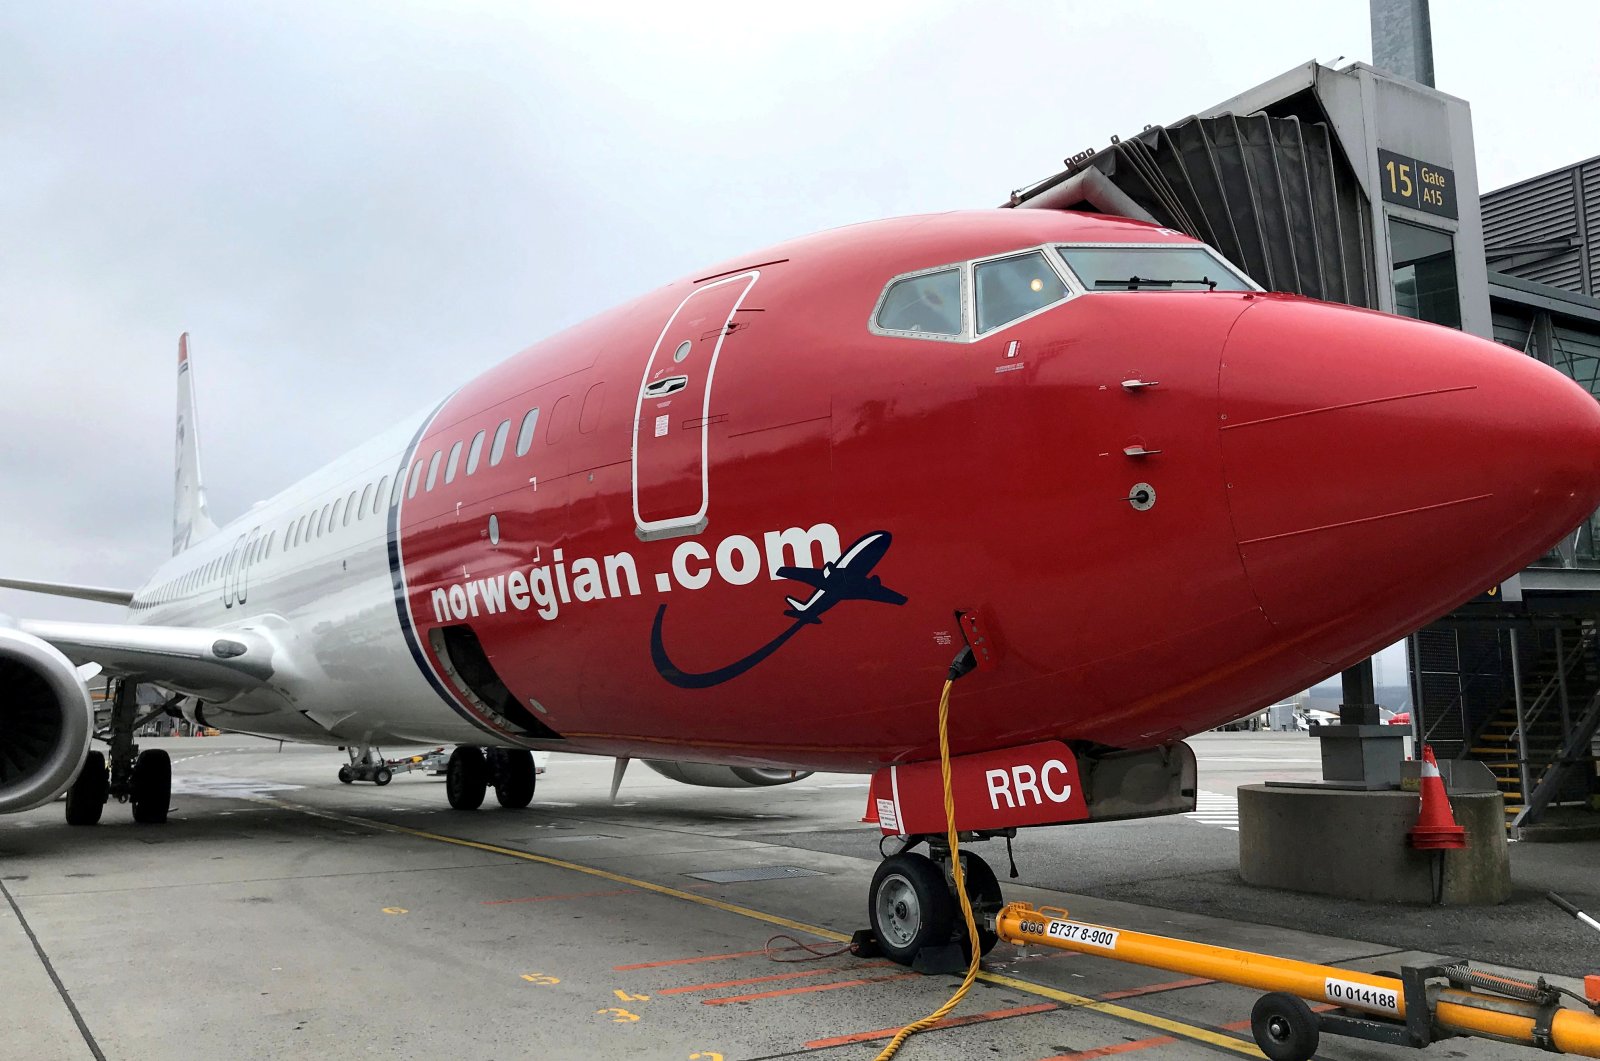 A Norwegian Air plane is refueled at Oslo Gardermoen airport, Norway, Nov. 7, 2019. (Reuters Photo)